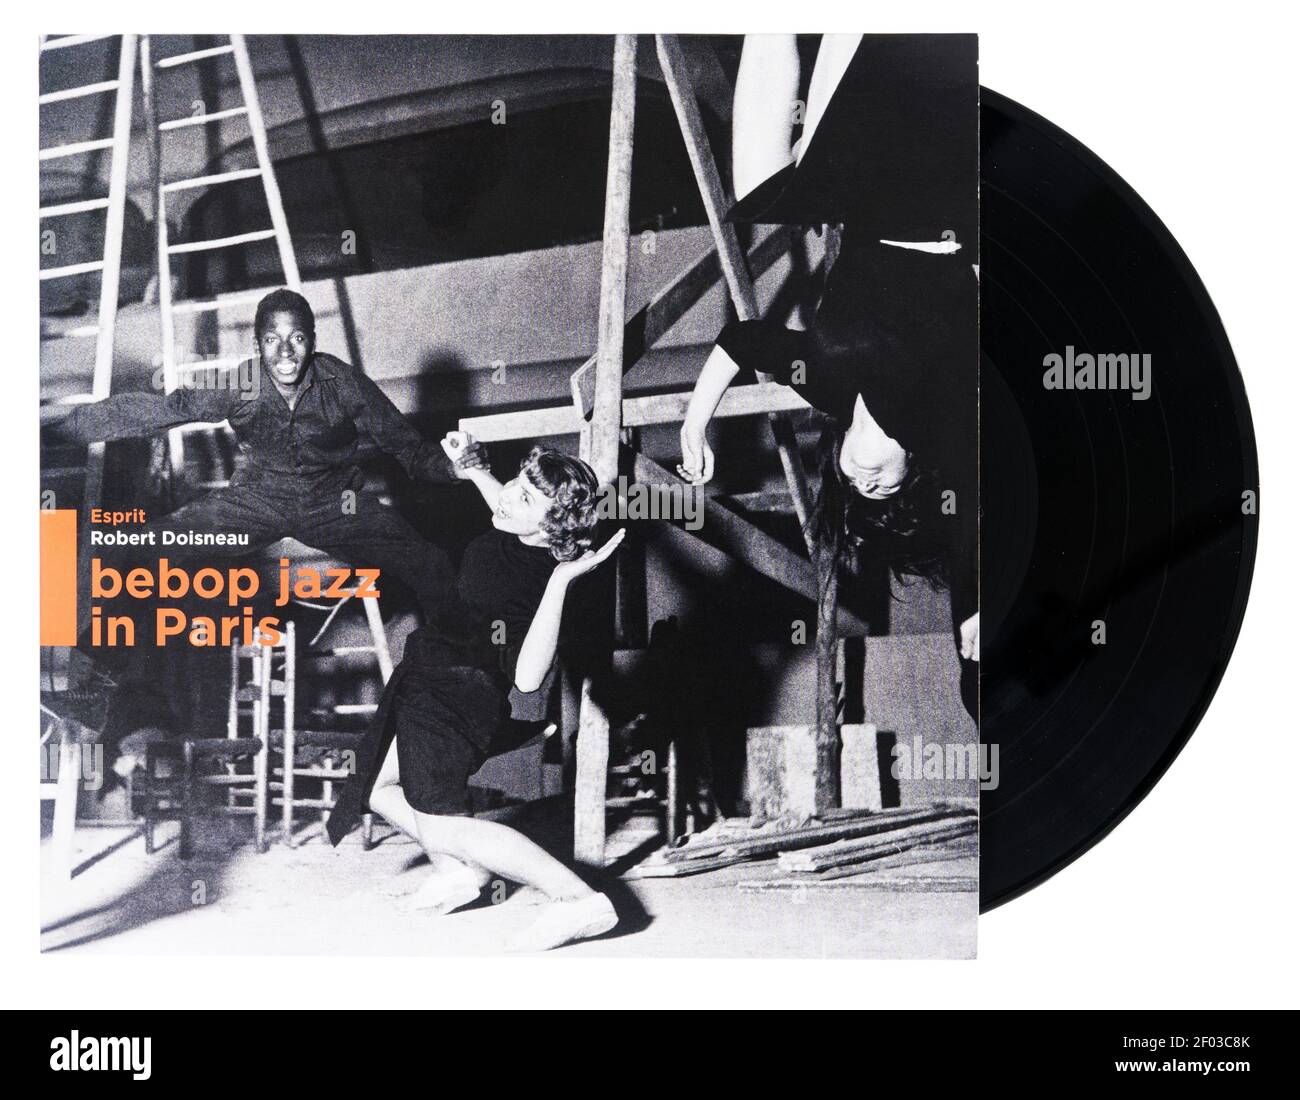 Bebop Jazz in Paris vinyl jazz album by Robert Doisneau Stock Photo